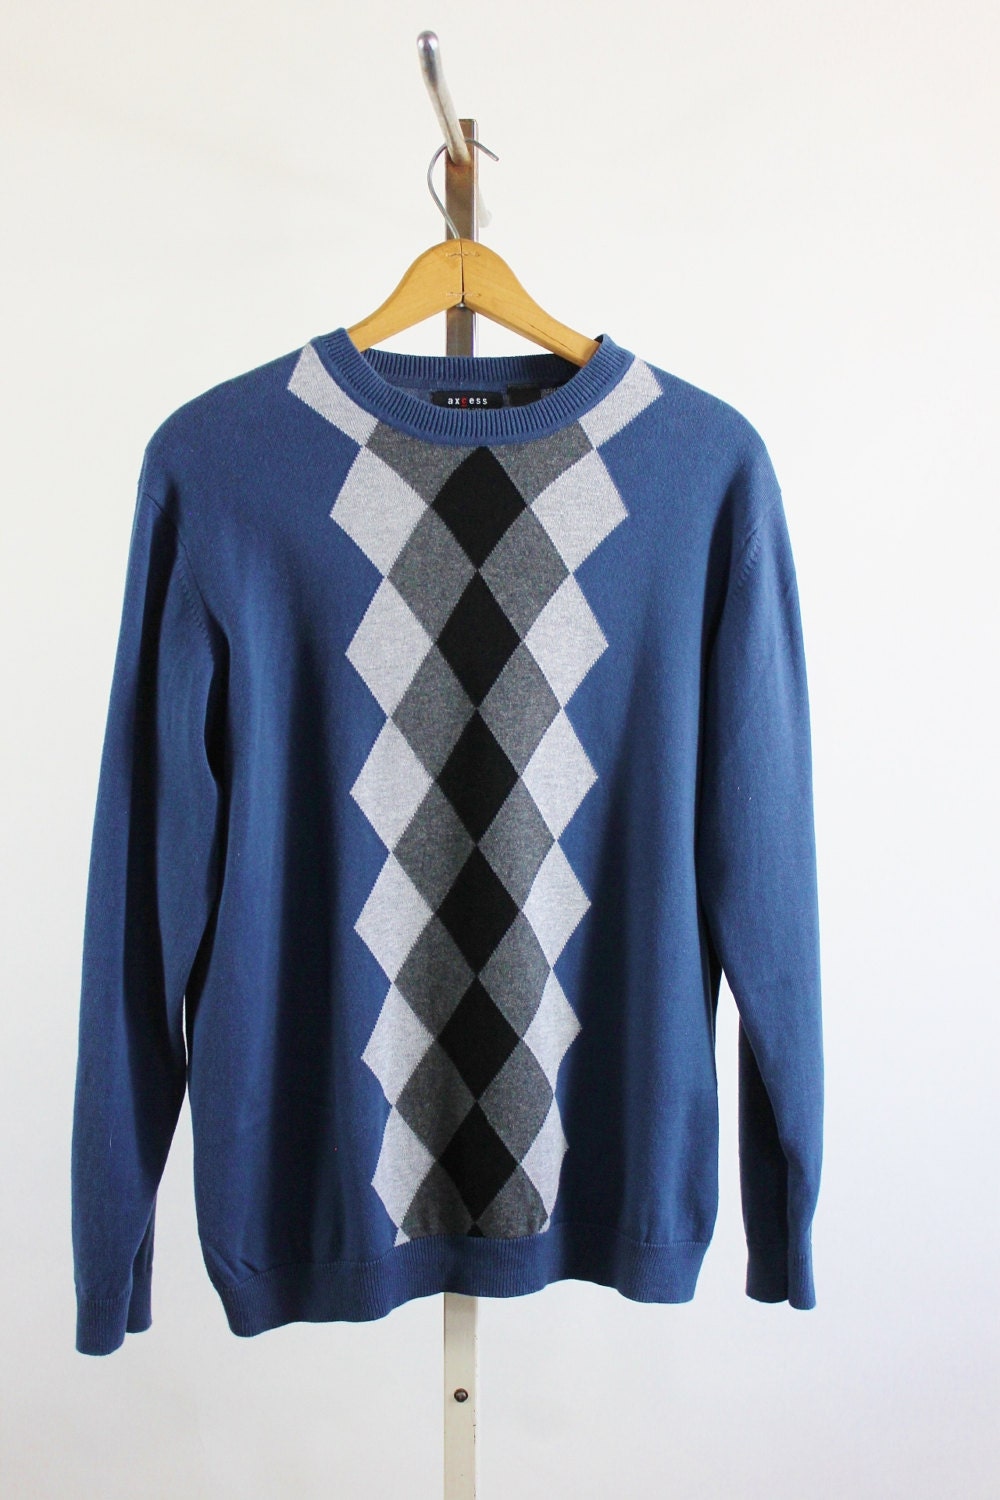 SALE Vintage Blue Gray Black and White Argyle Sweater Mens